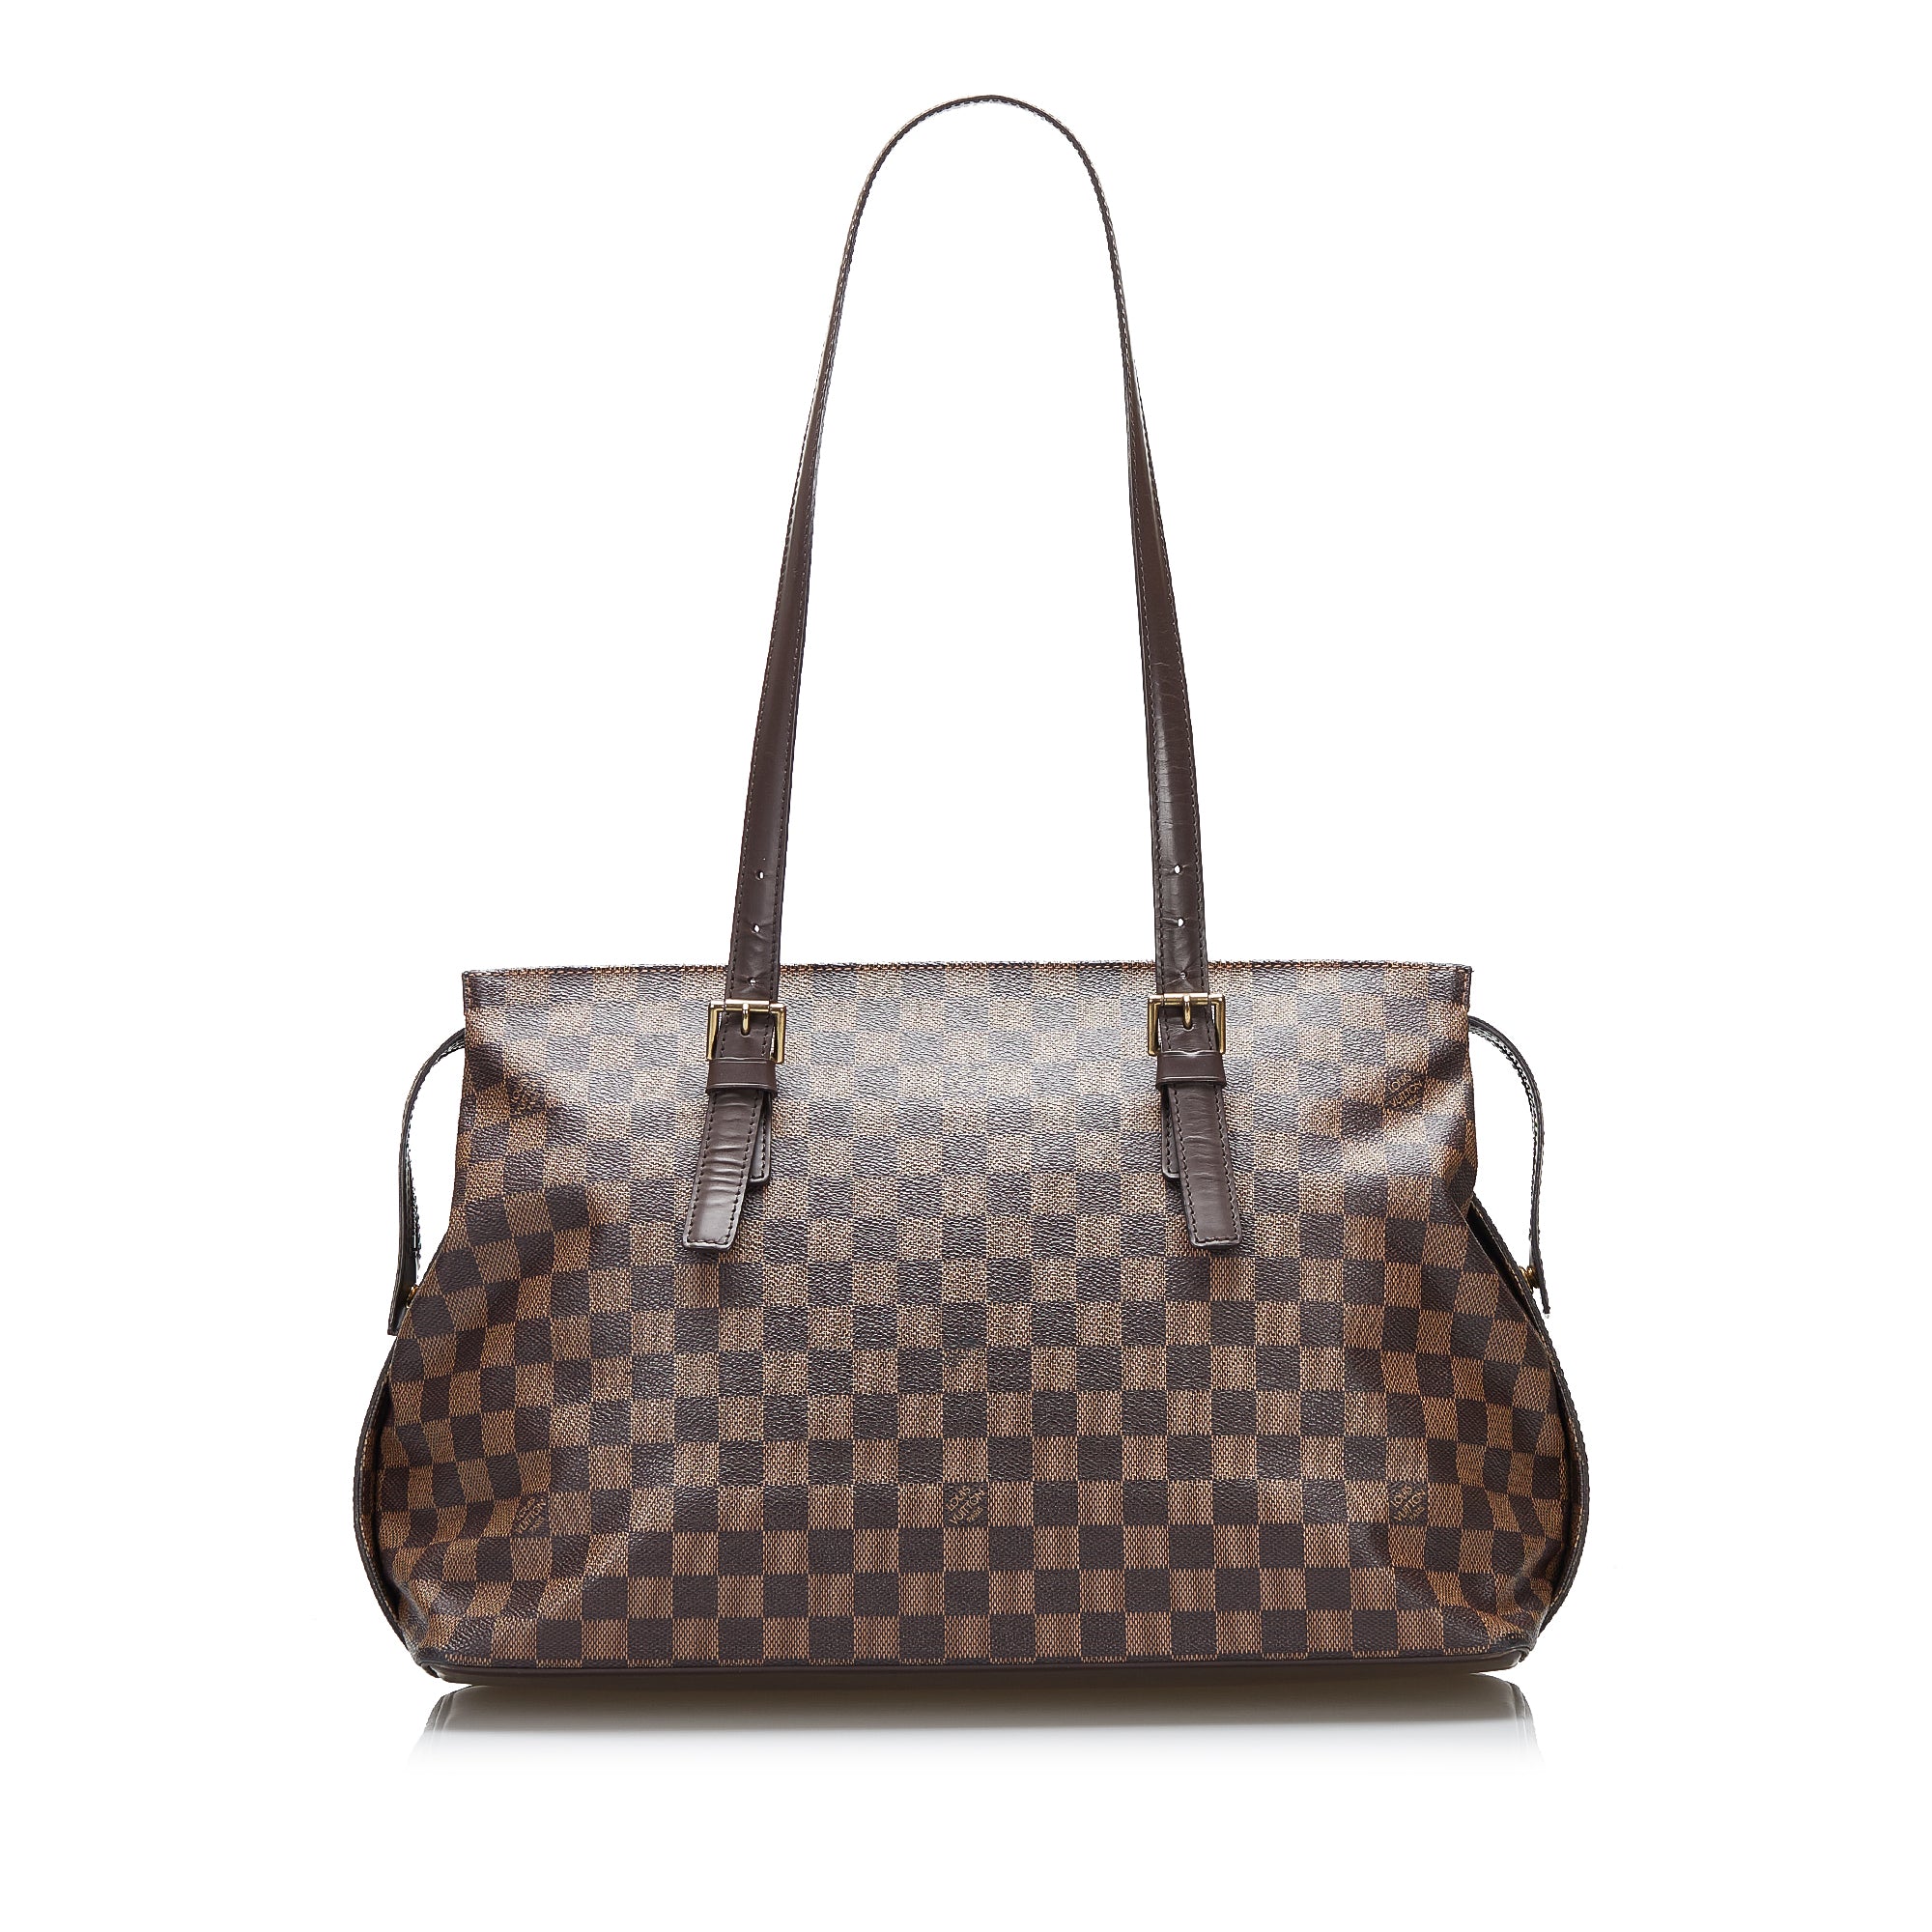 My Louis Vuitton Collection Part 15--Damier Ebene Chelsea Tote Bag 